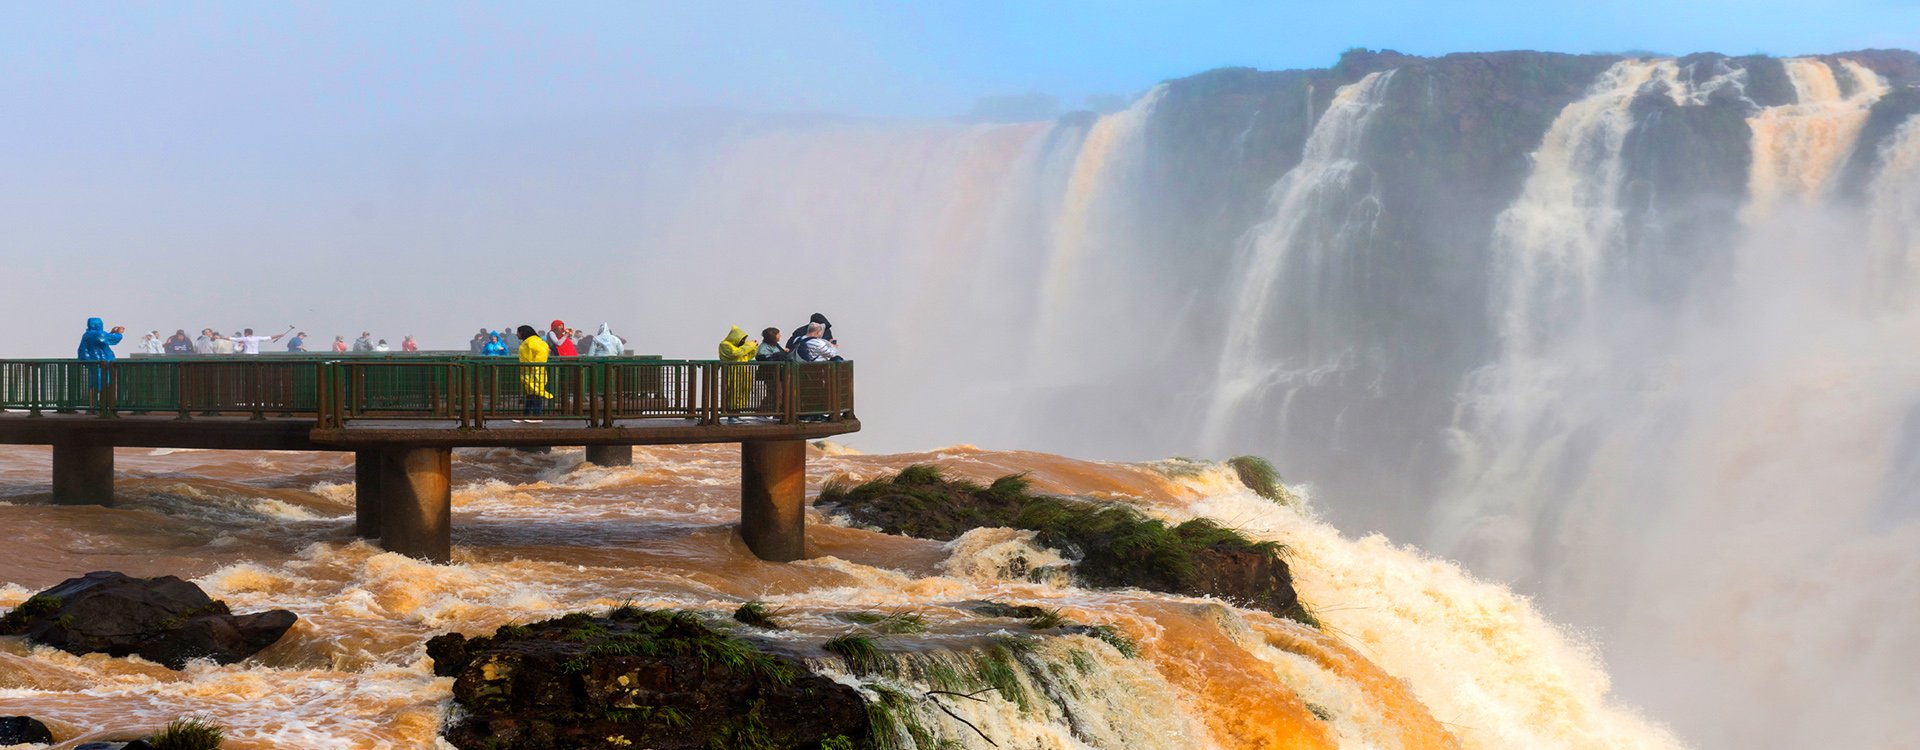 Destinations_Argentina_Iguazu Fall 2